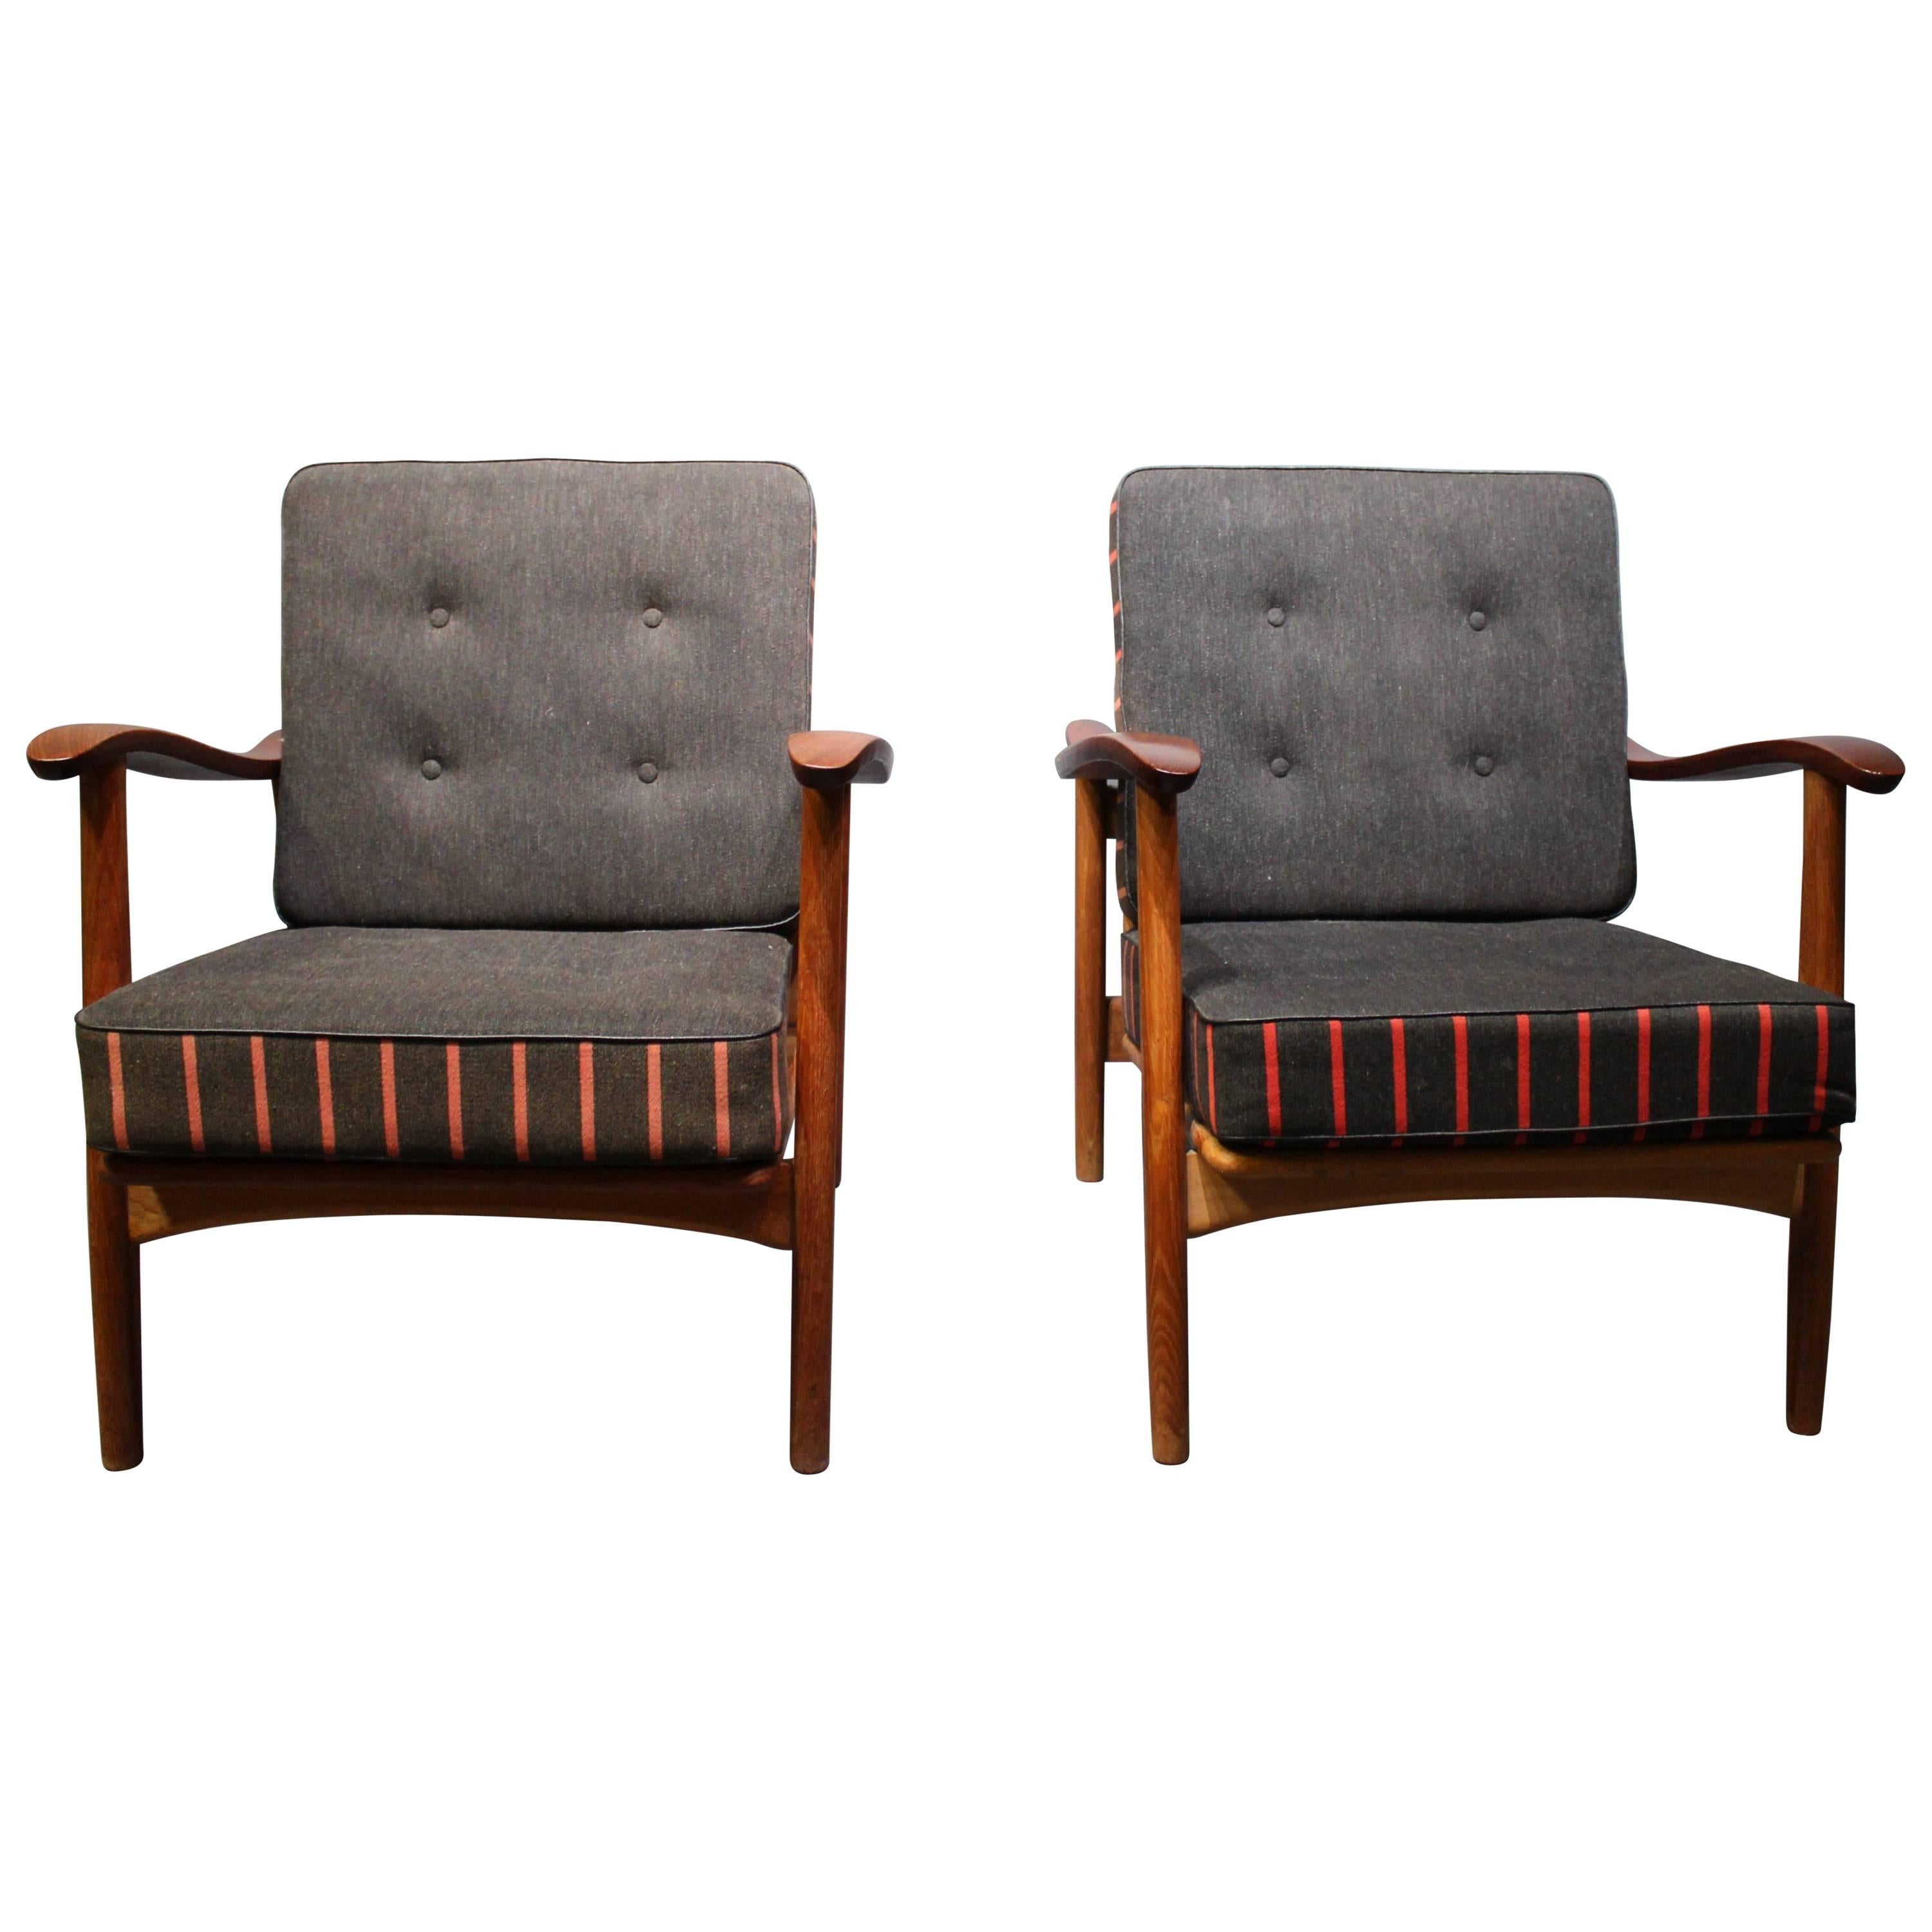 Pair of Easy Chairs in Teak and Dark Grey Upholstery, Danish Design, 1960s